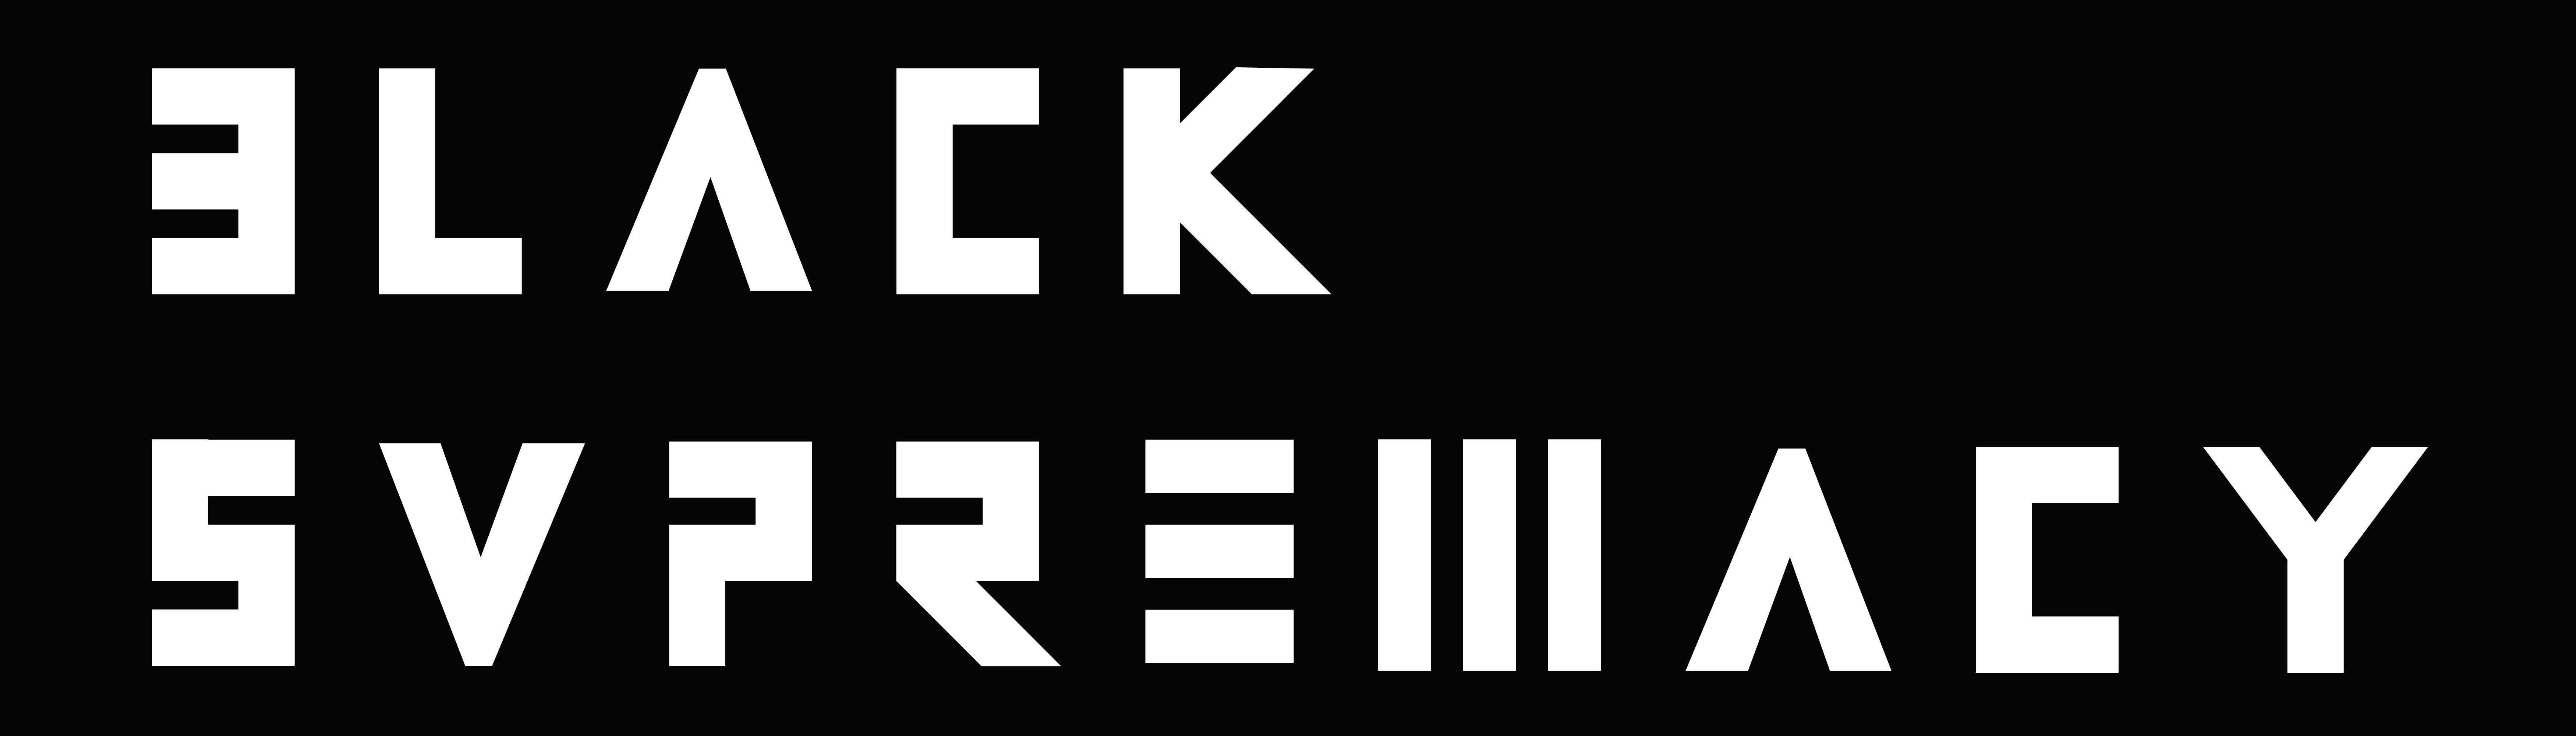 Supremacy Logo - BS logo black - S A M A E L official website